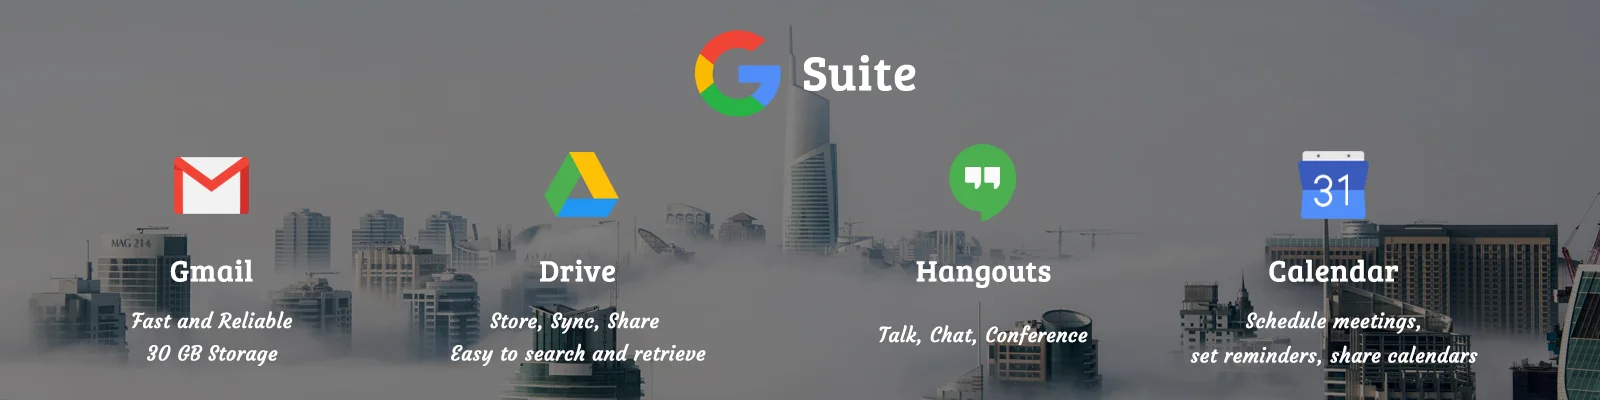 G suite Partner Coimbatore | G suite Reseller Coimbatore | Google Apps Reseller